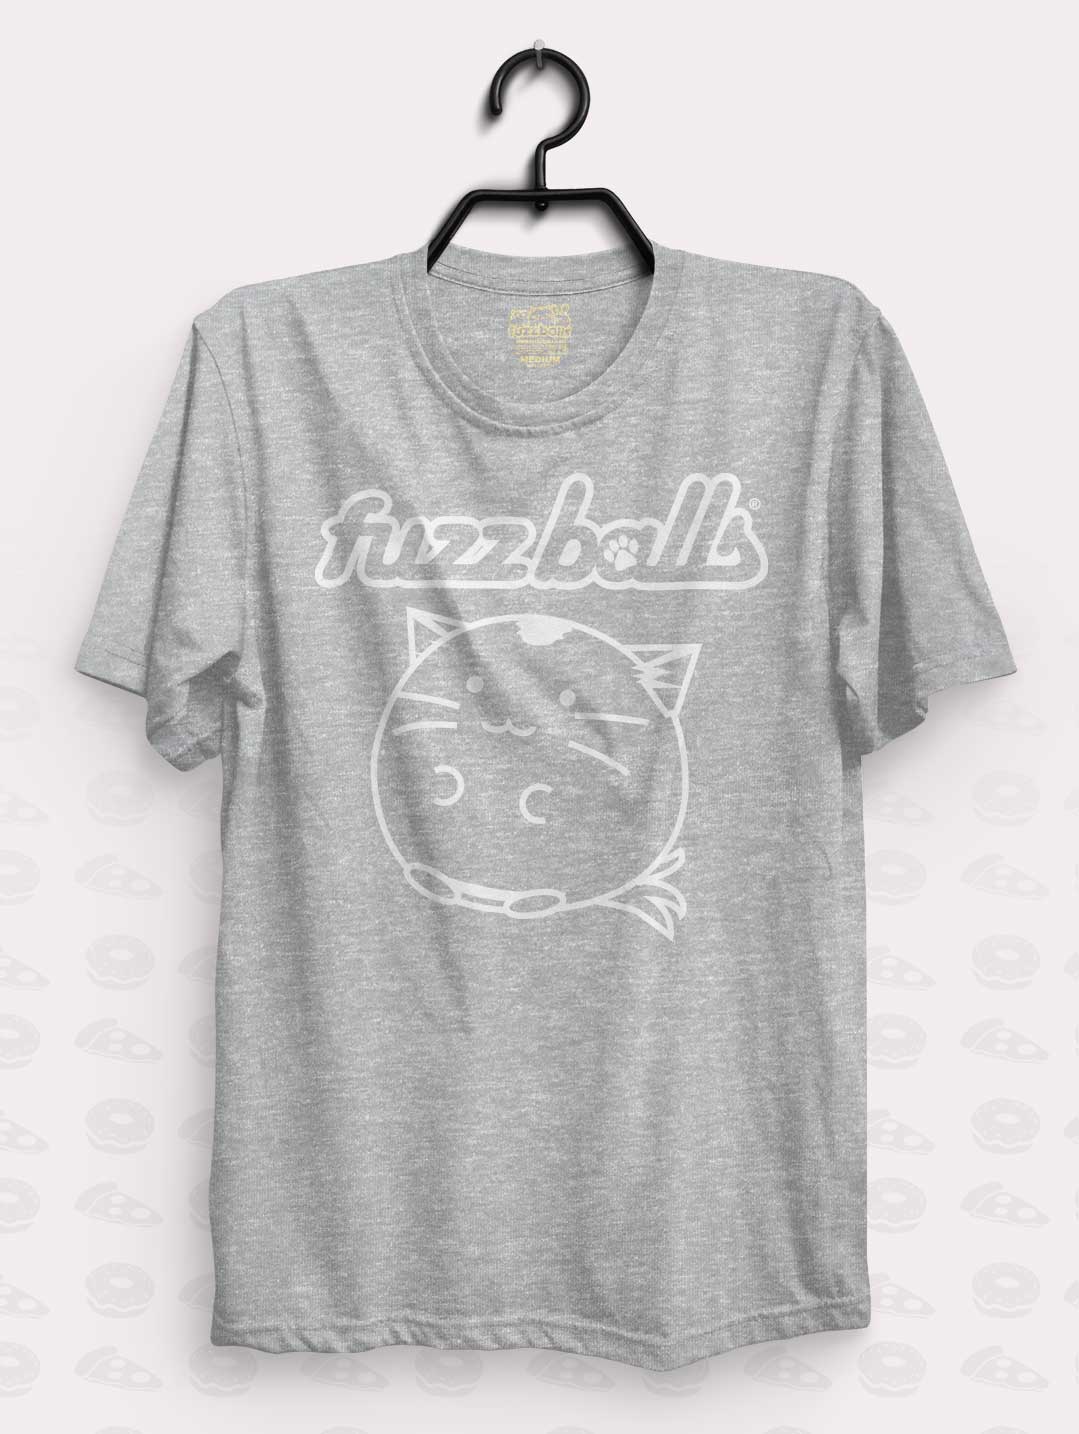 Fuzzballs Cat Shirt